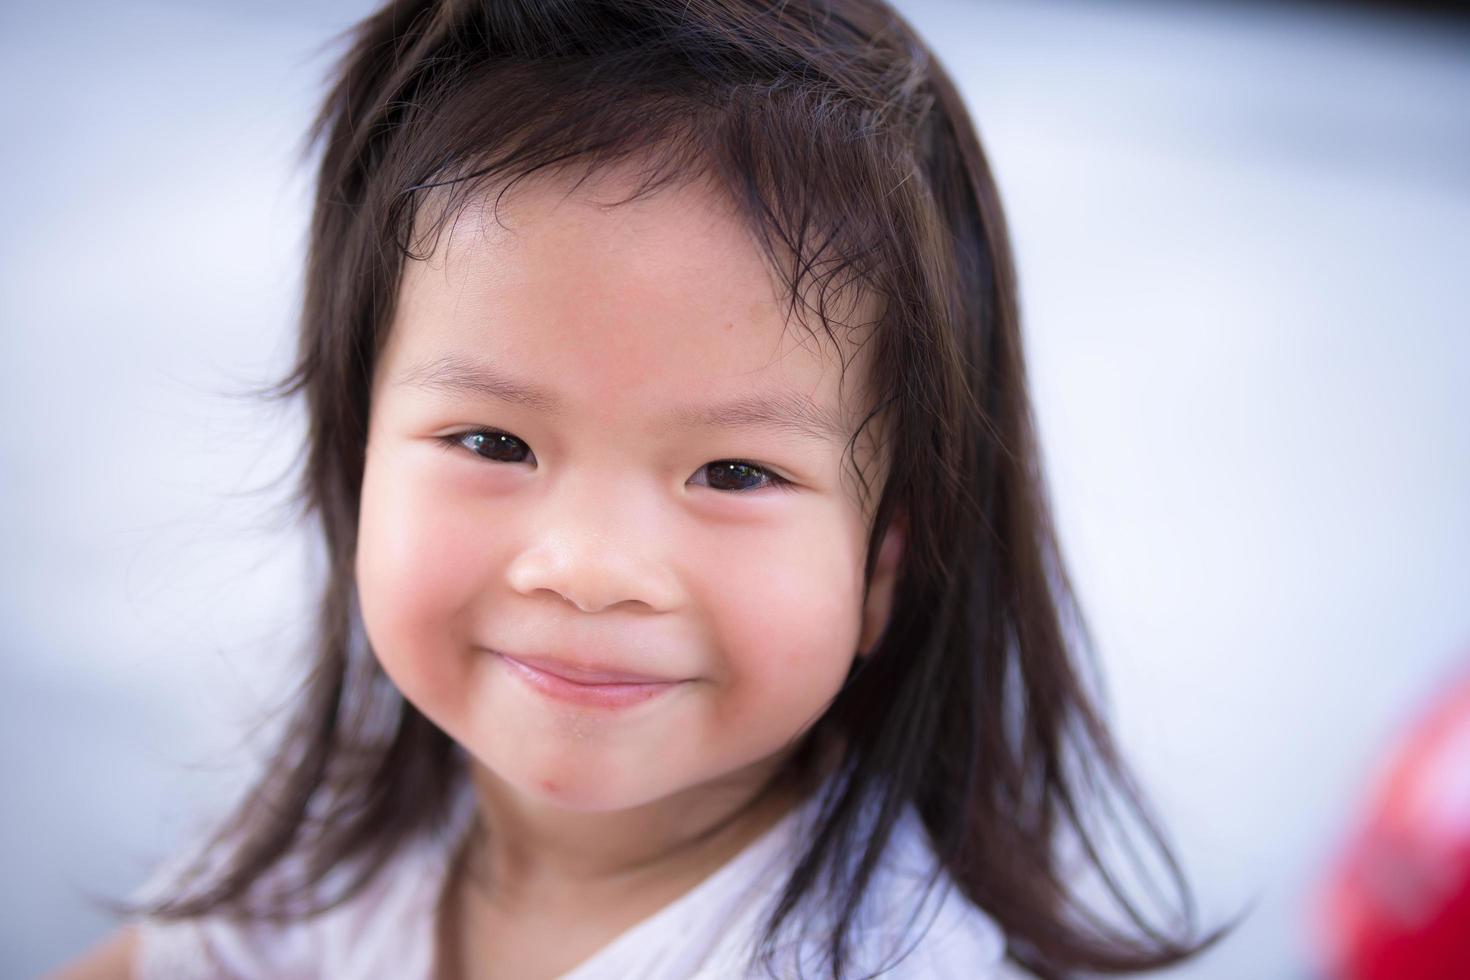 schattig kind zoete glimlach. hoofdschot. meisje van 3 jaar oud. foto